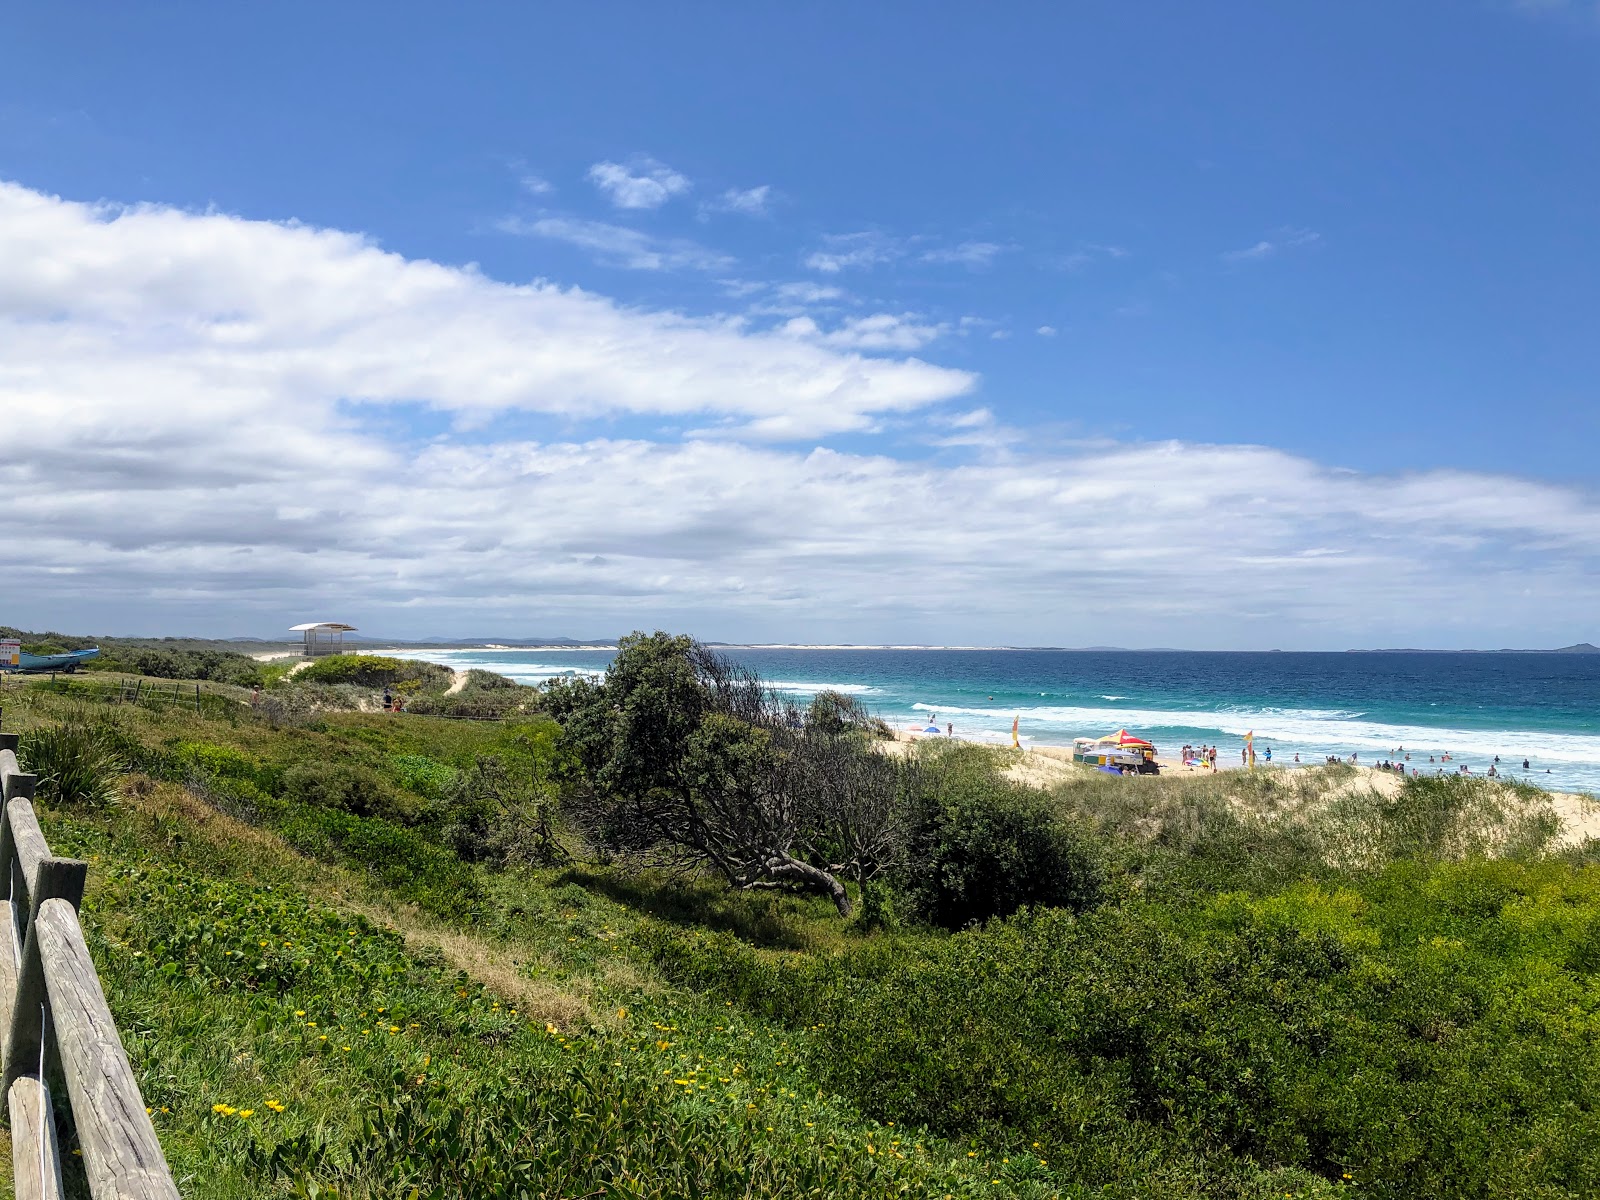 Fotografija Wanderrabah Beach nahaja se v naravnem okolju